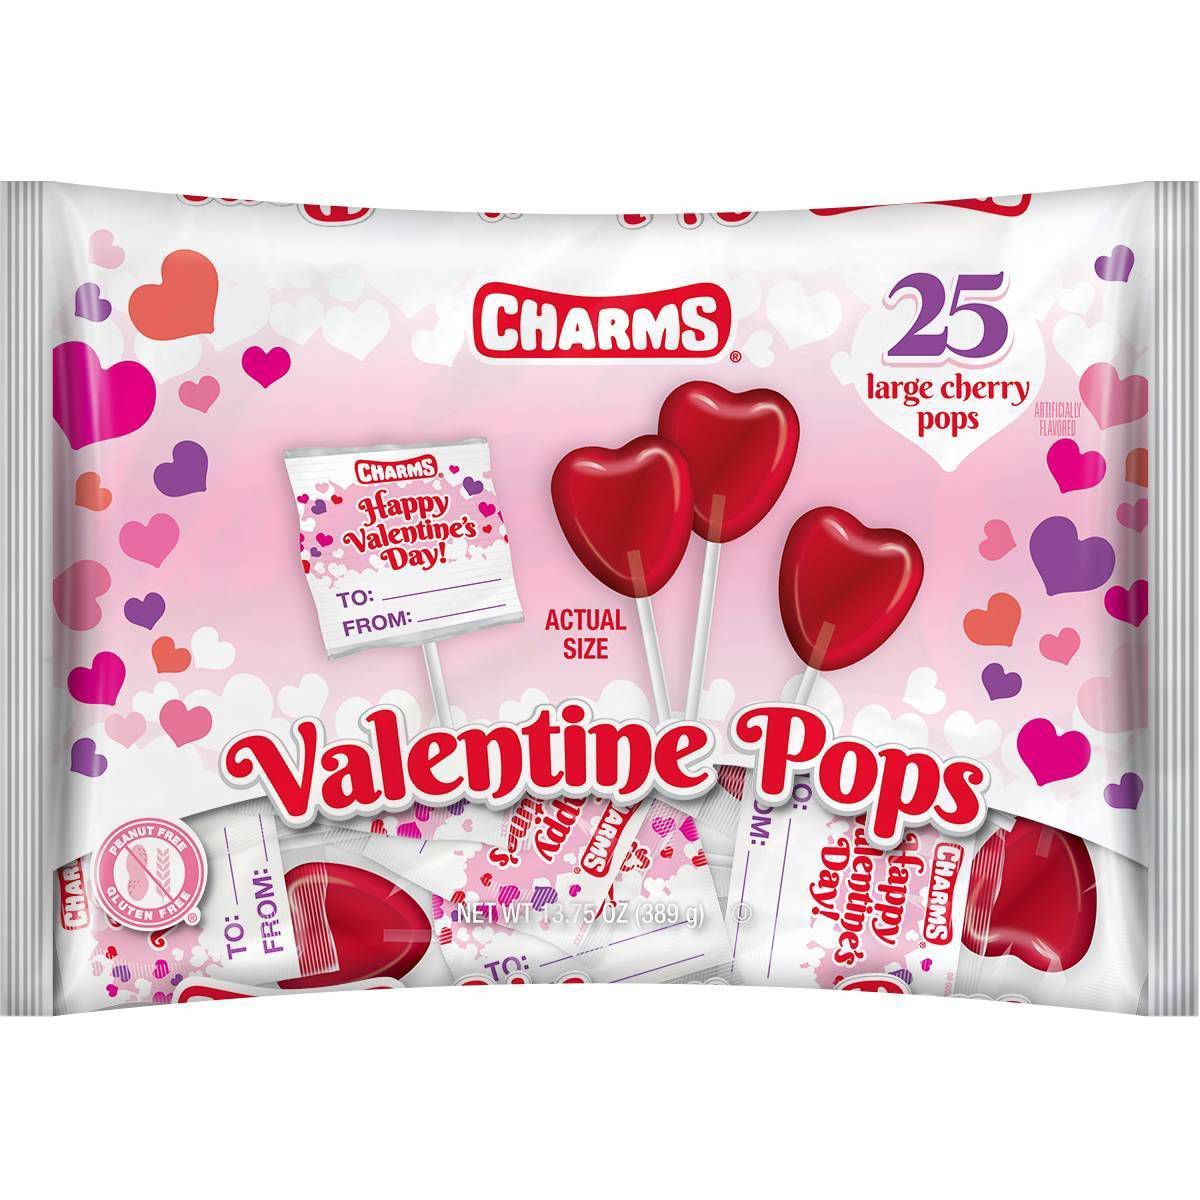 Charms Valentine's Pops - 13.75oz | Target